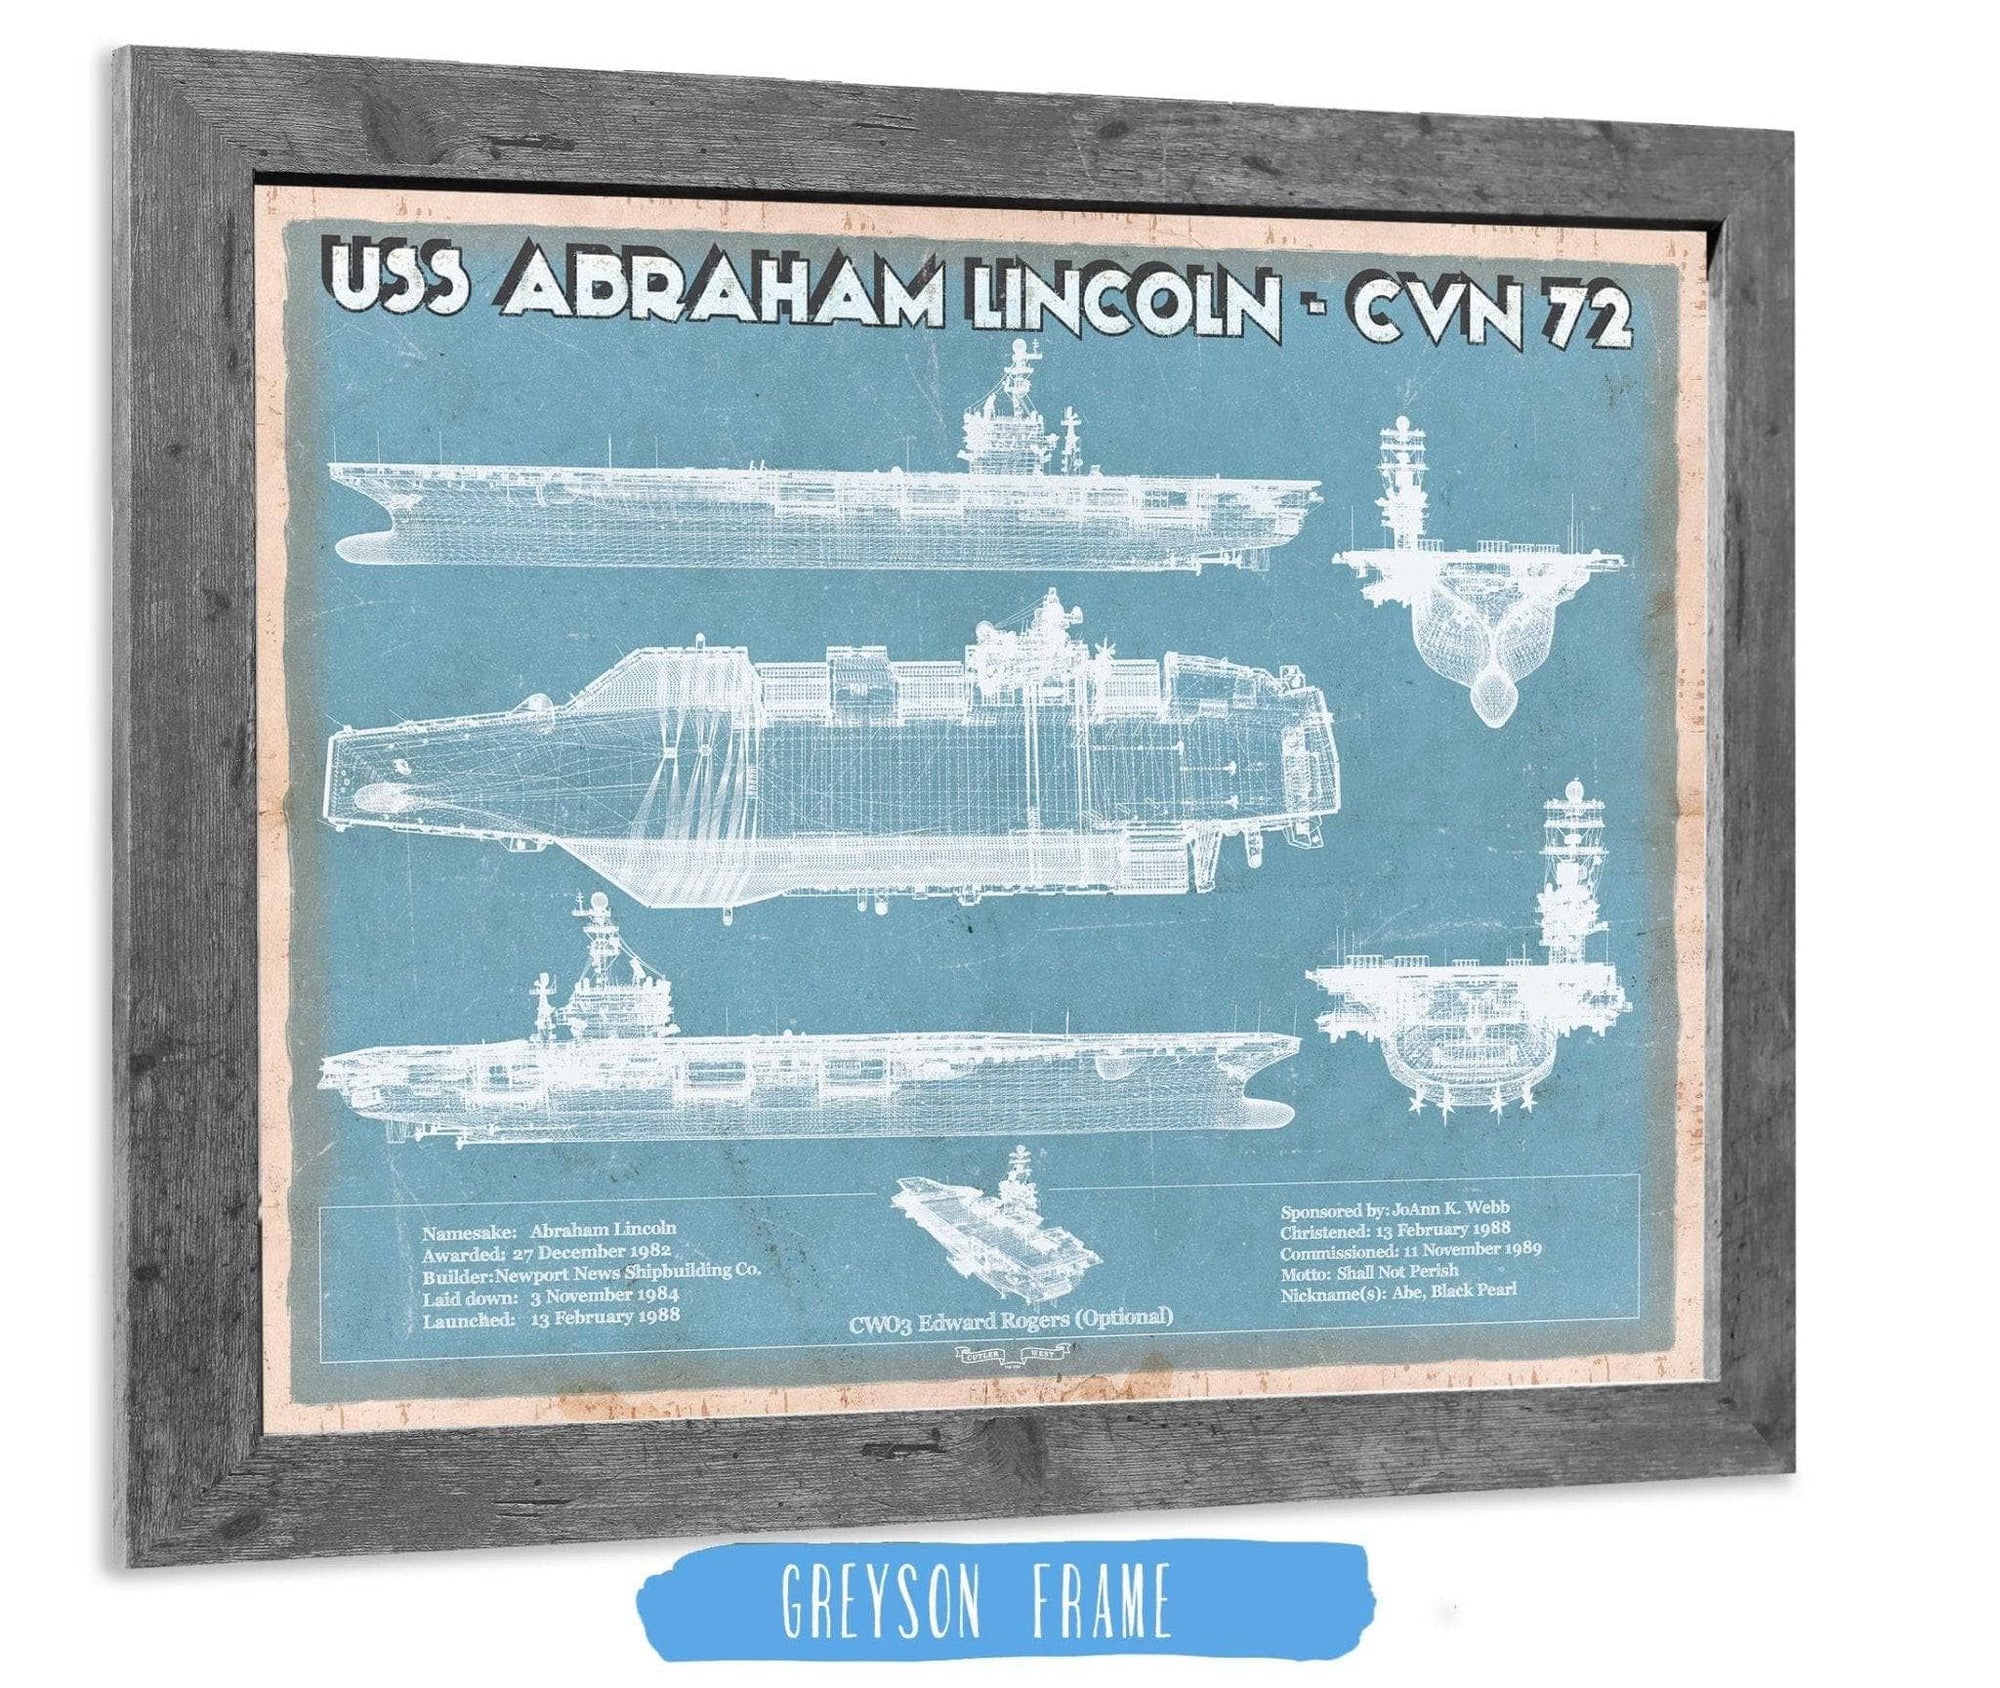 Cutler West Naval Military 14" x 11" / Greyson Frame USS Abraham Lincoln (CVN 72) Aircraft Carrier Blueprint Original Military Wall Art - Customizable 835000057_26255